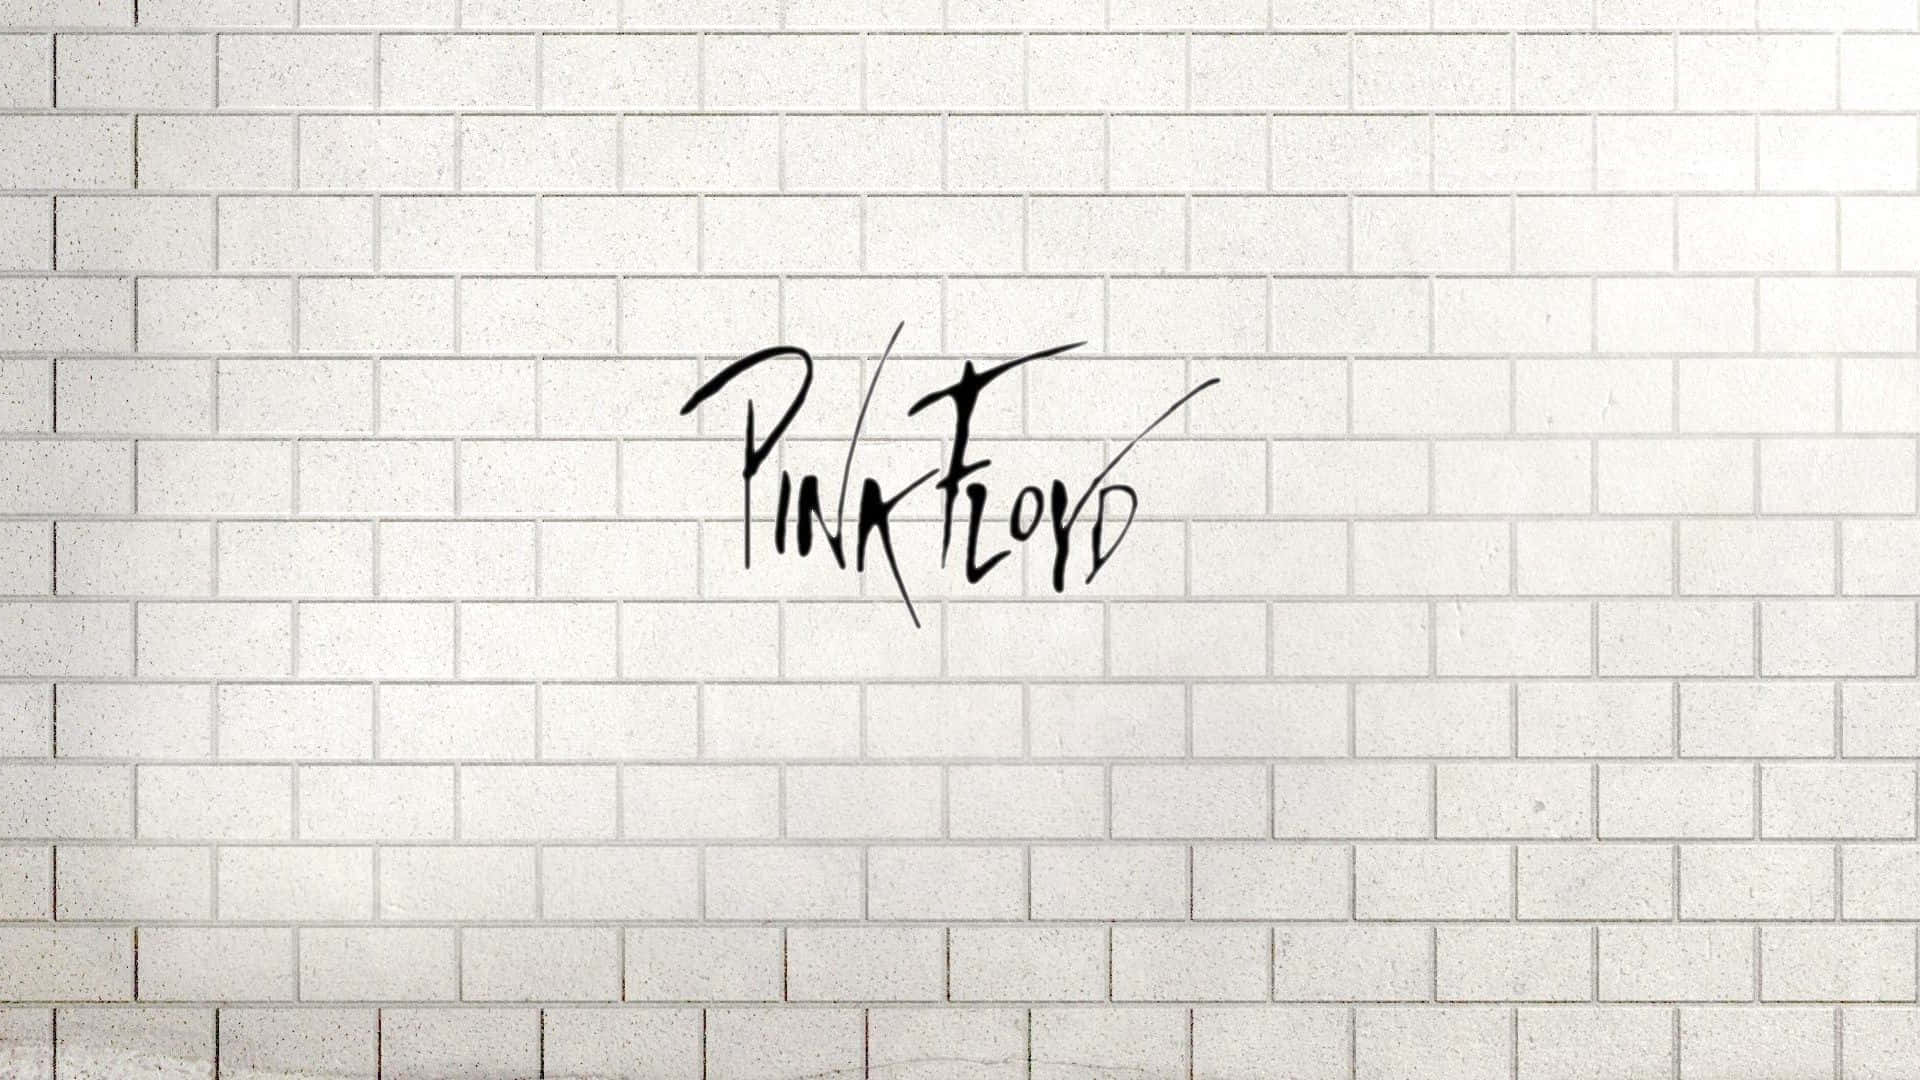 Ettkreativt Hyllningsarbete Till Pink Floyds Album 